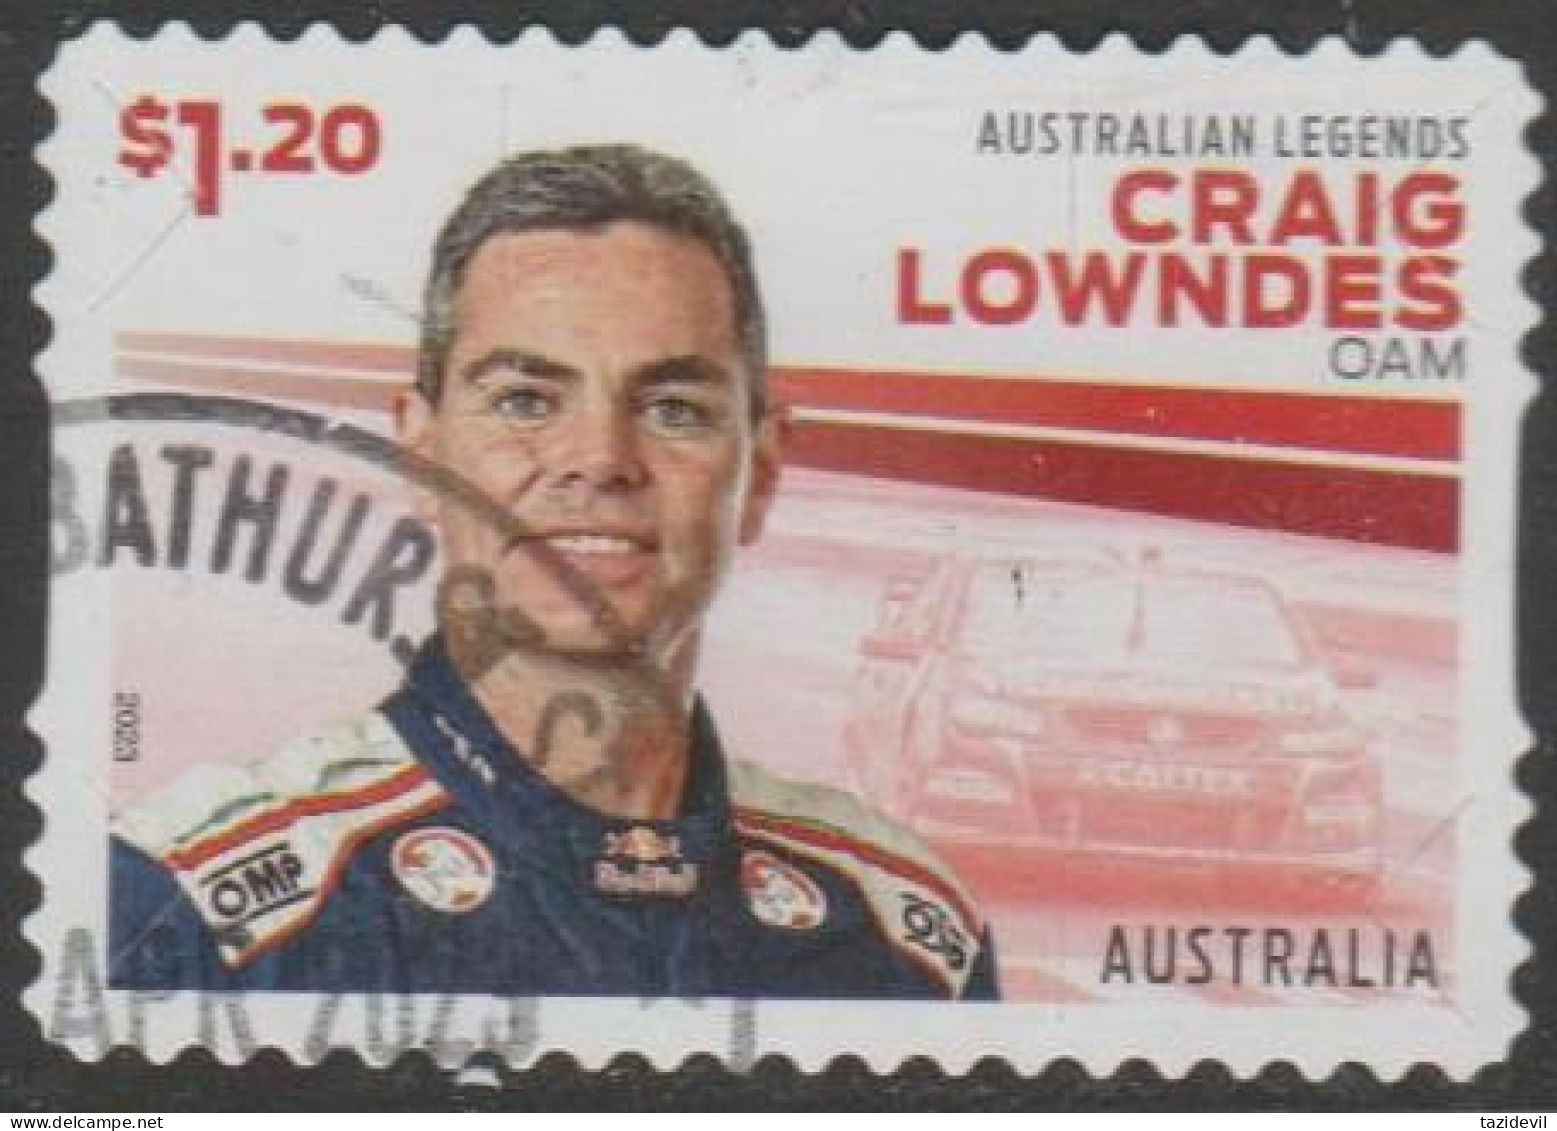 AUSTRALIA - DIE-CUT-USED 2023 $1.20 Legends Of Motor Sport - Craig Lowdens OAM - Usados